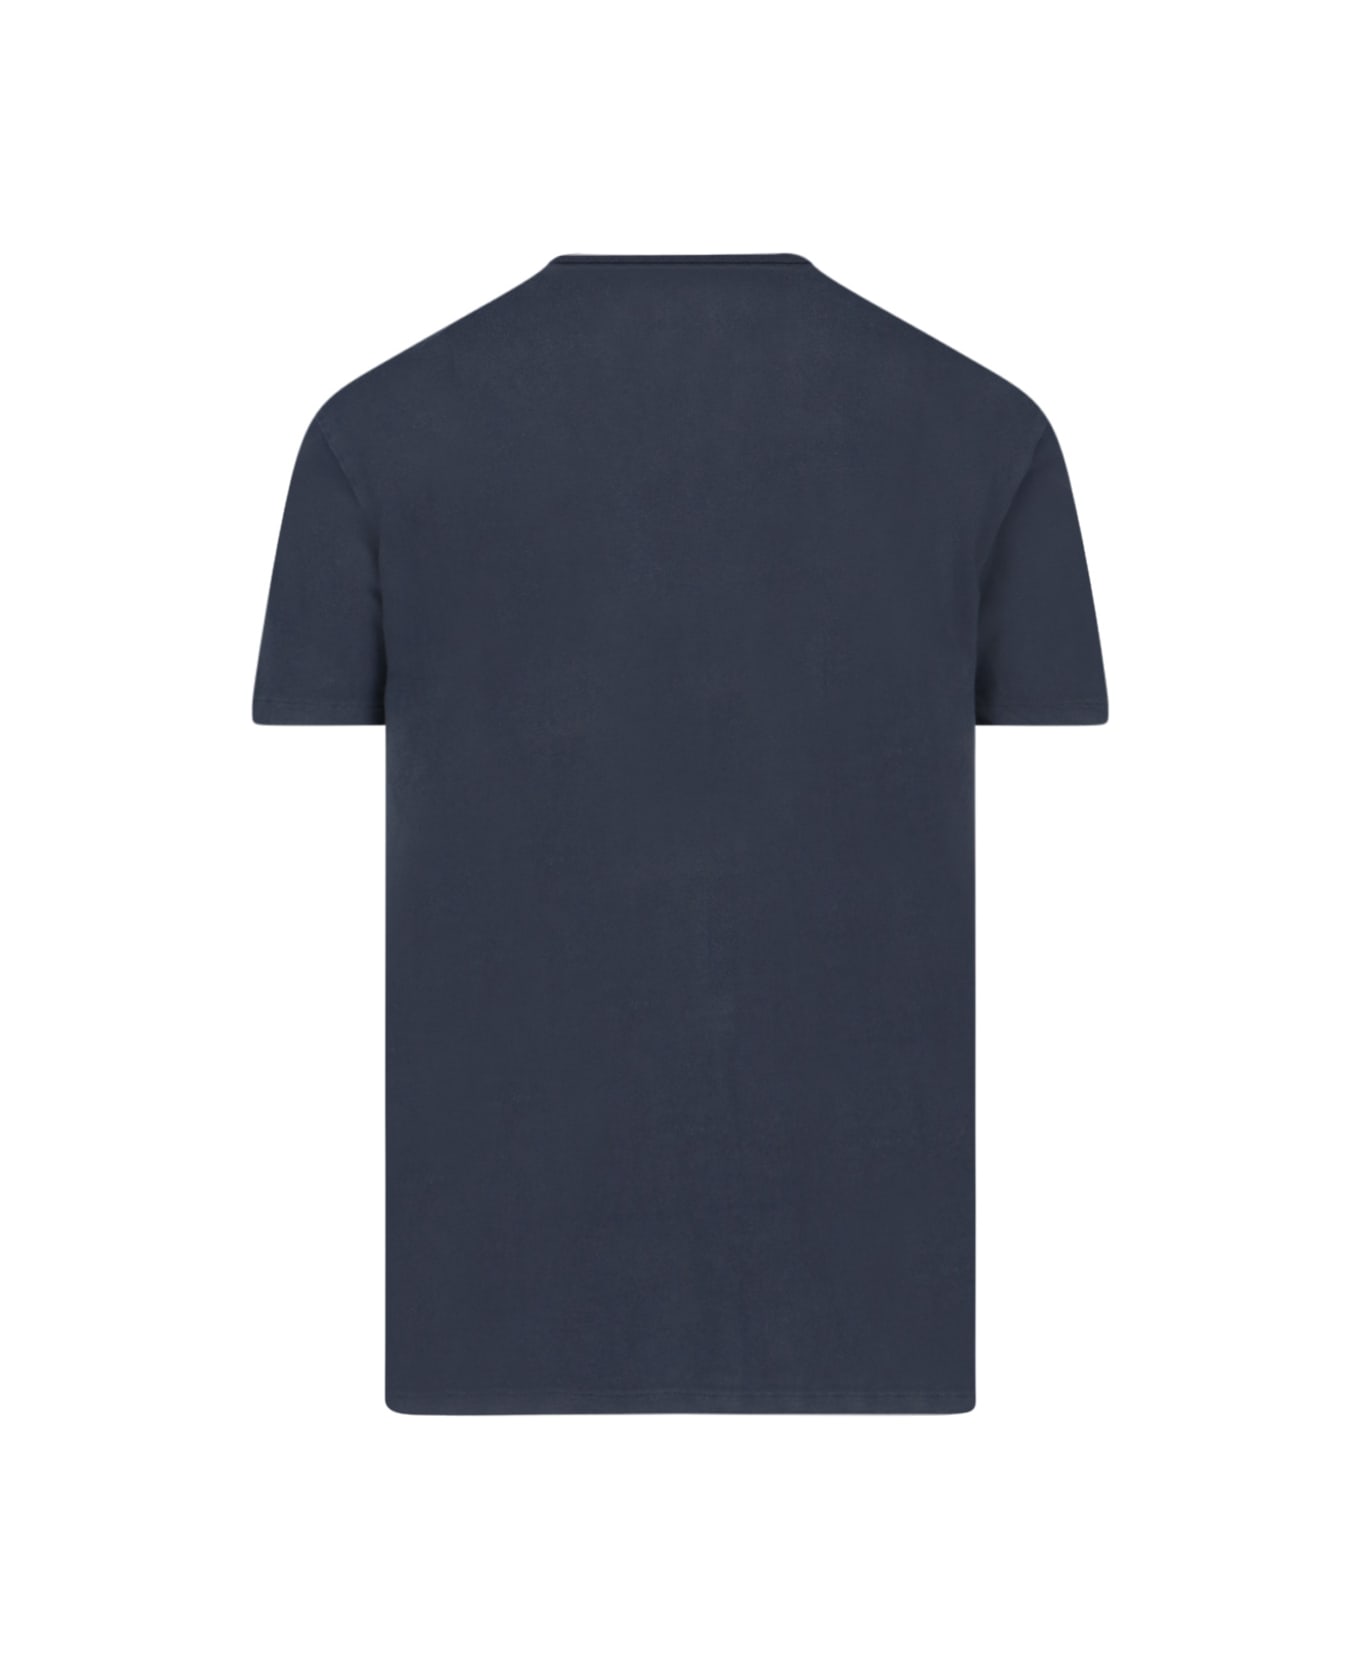 Polo Ralph Lauren Logo T-shirt - Faded black canvas